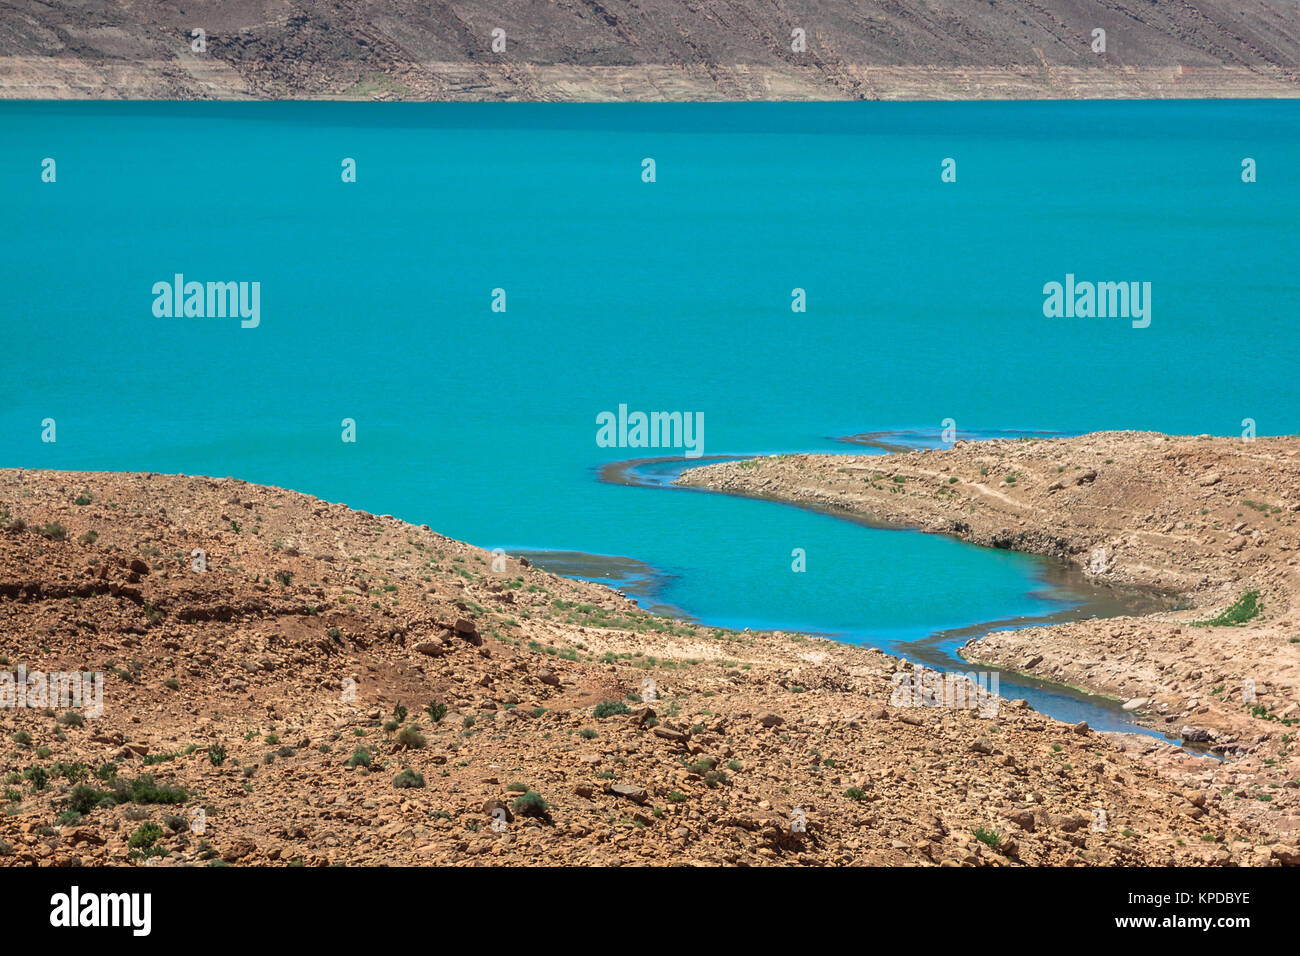 lake al-hassan addakhil in errachidia morocco Stock Photo